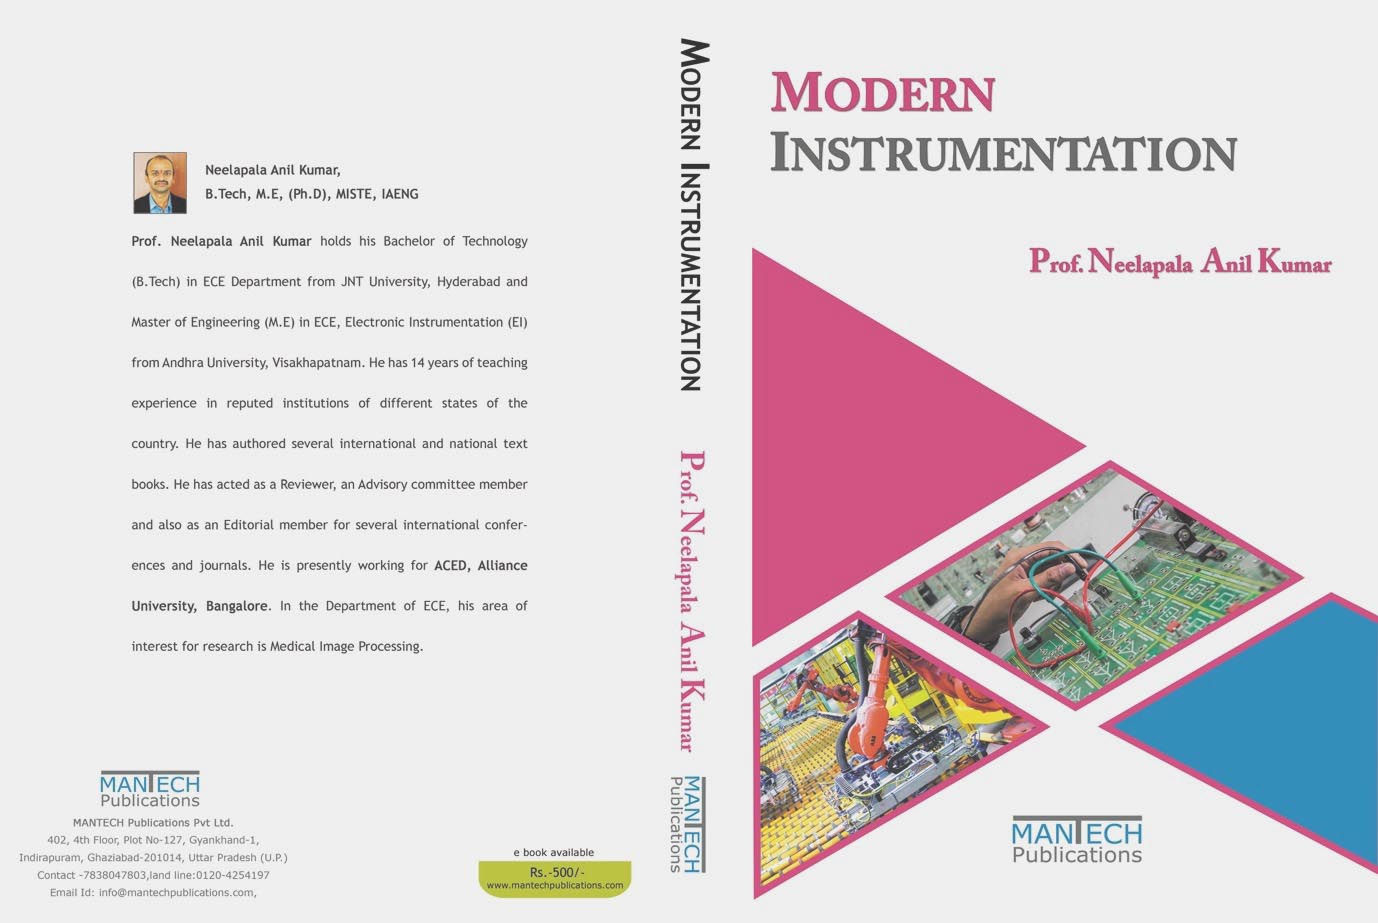 Alliance University got his book published on Modern Instrumentation